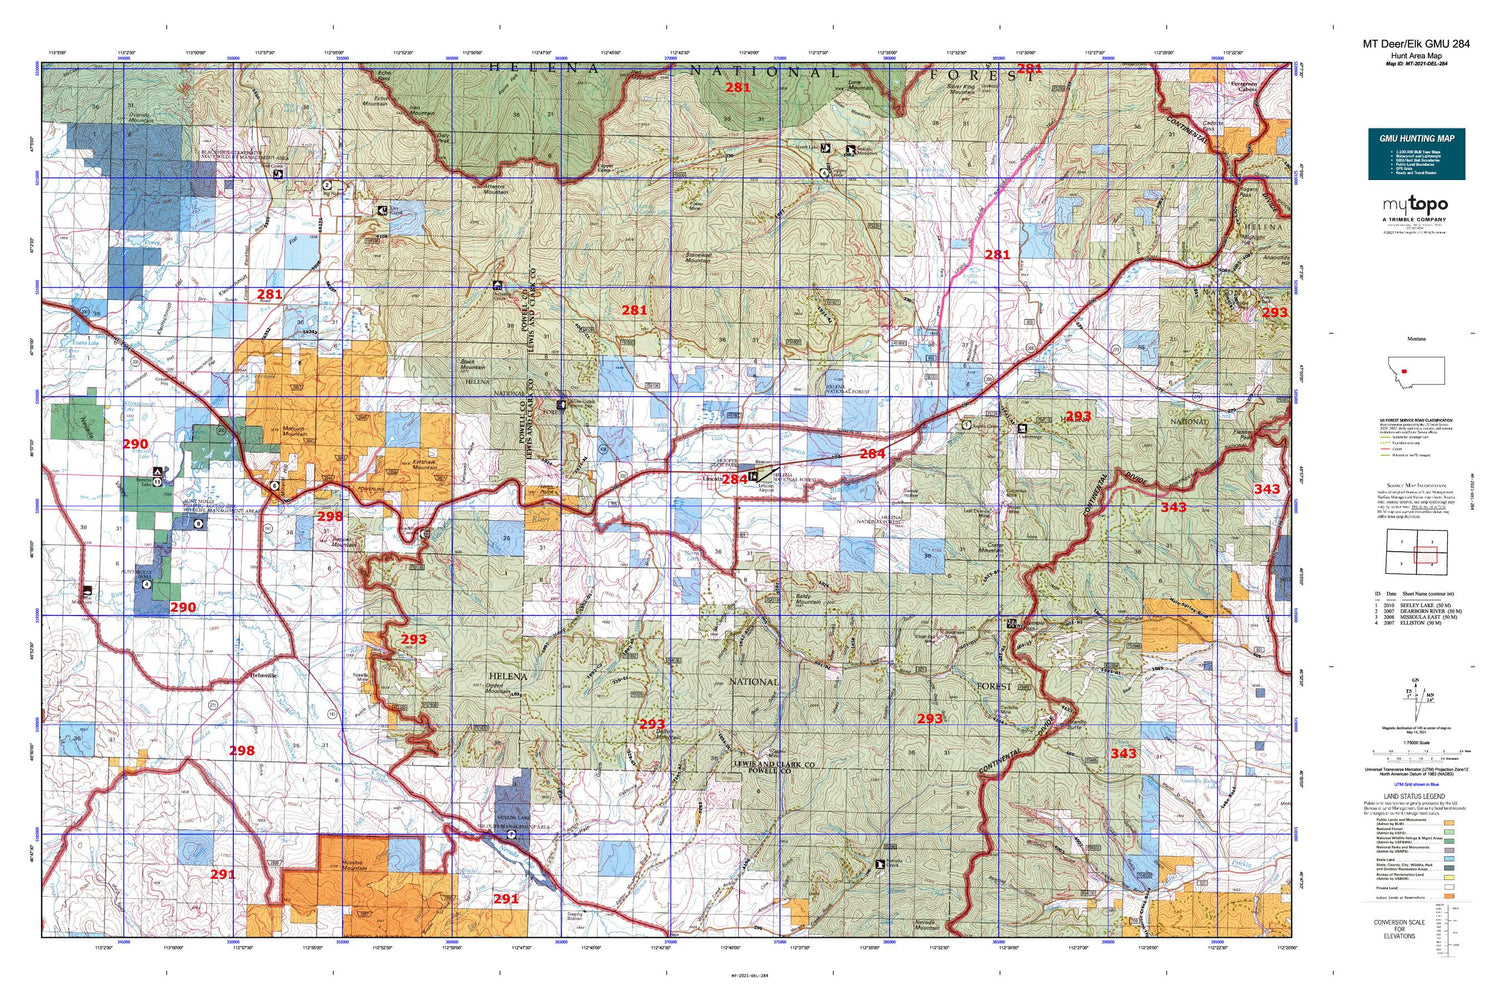 Montana Deer/Elk GMU 284 Map Image